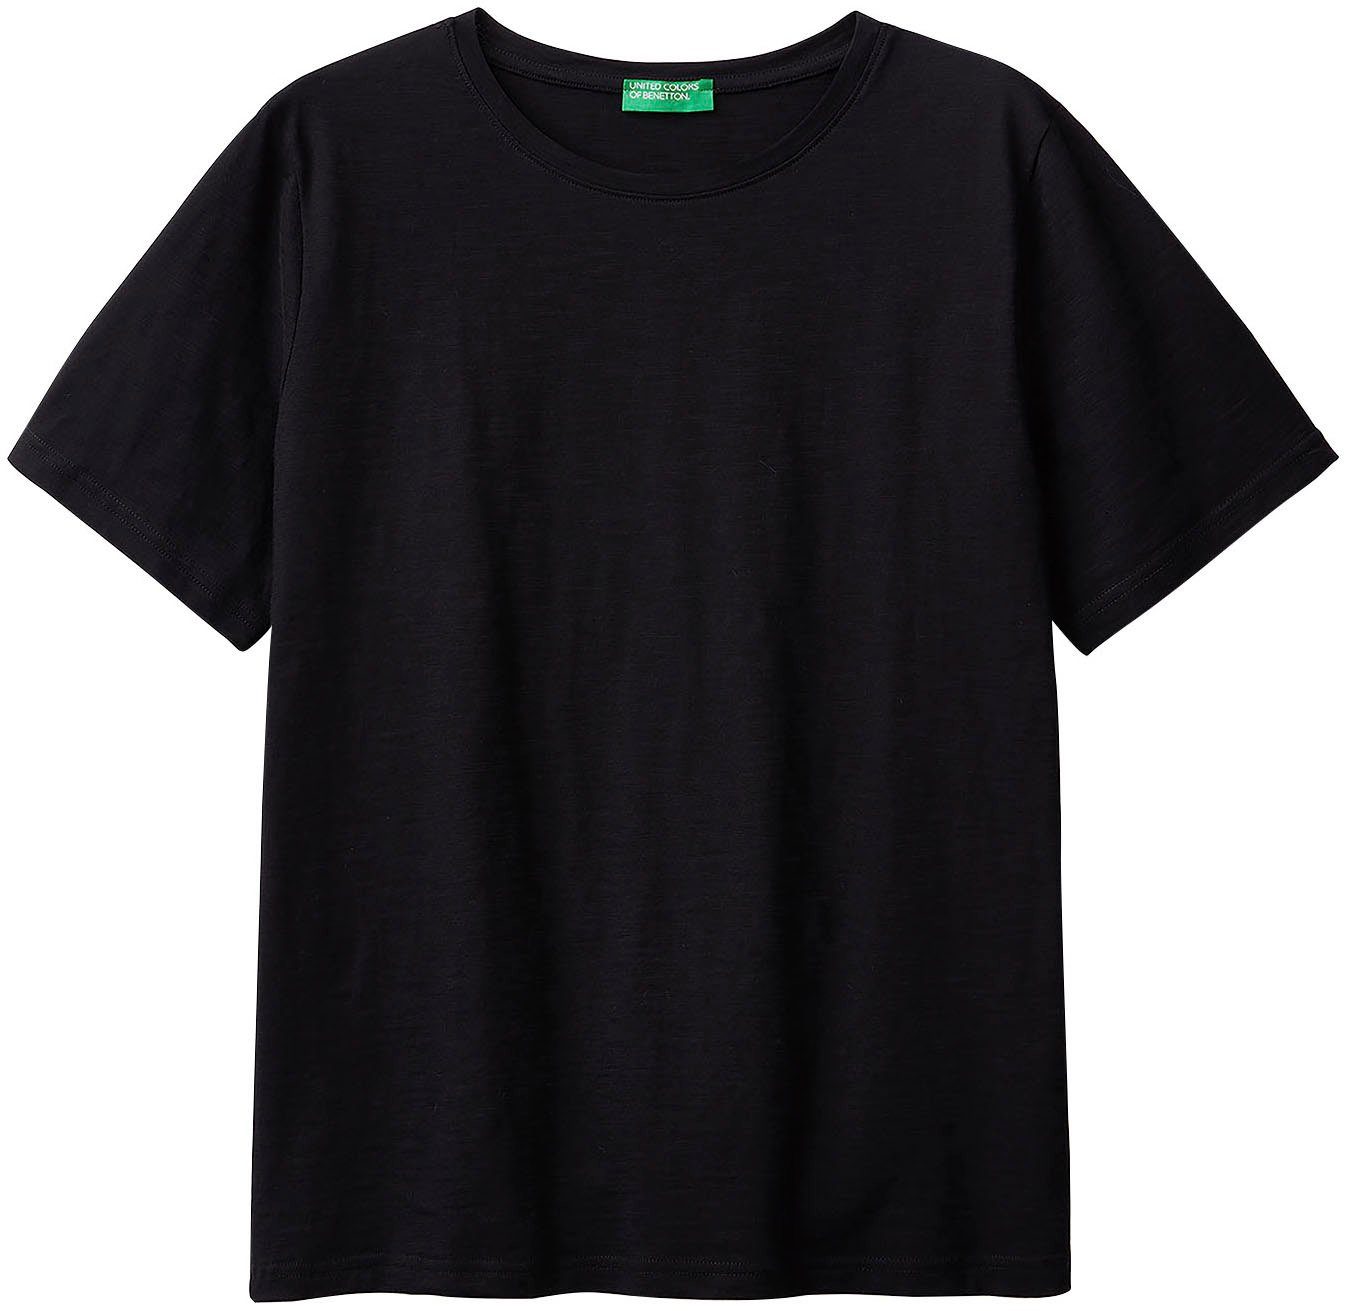 United Colors of Benetton in T-Shirt schwarz cleaner Basic-Optik